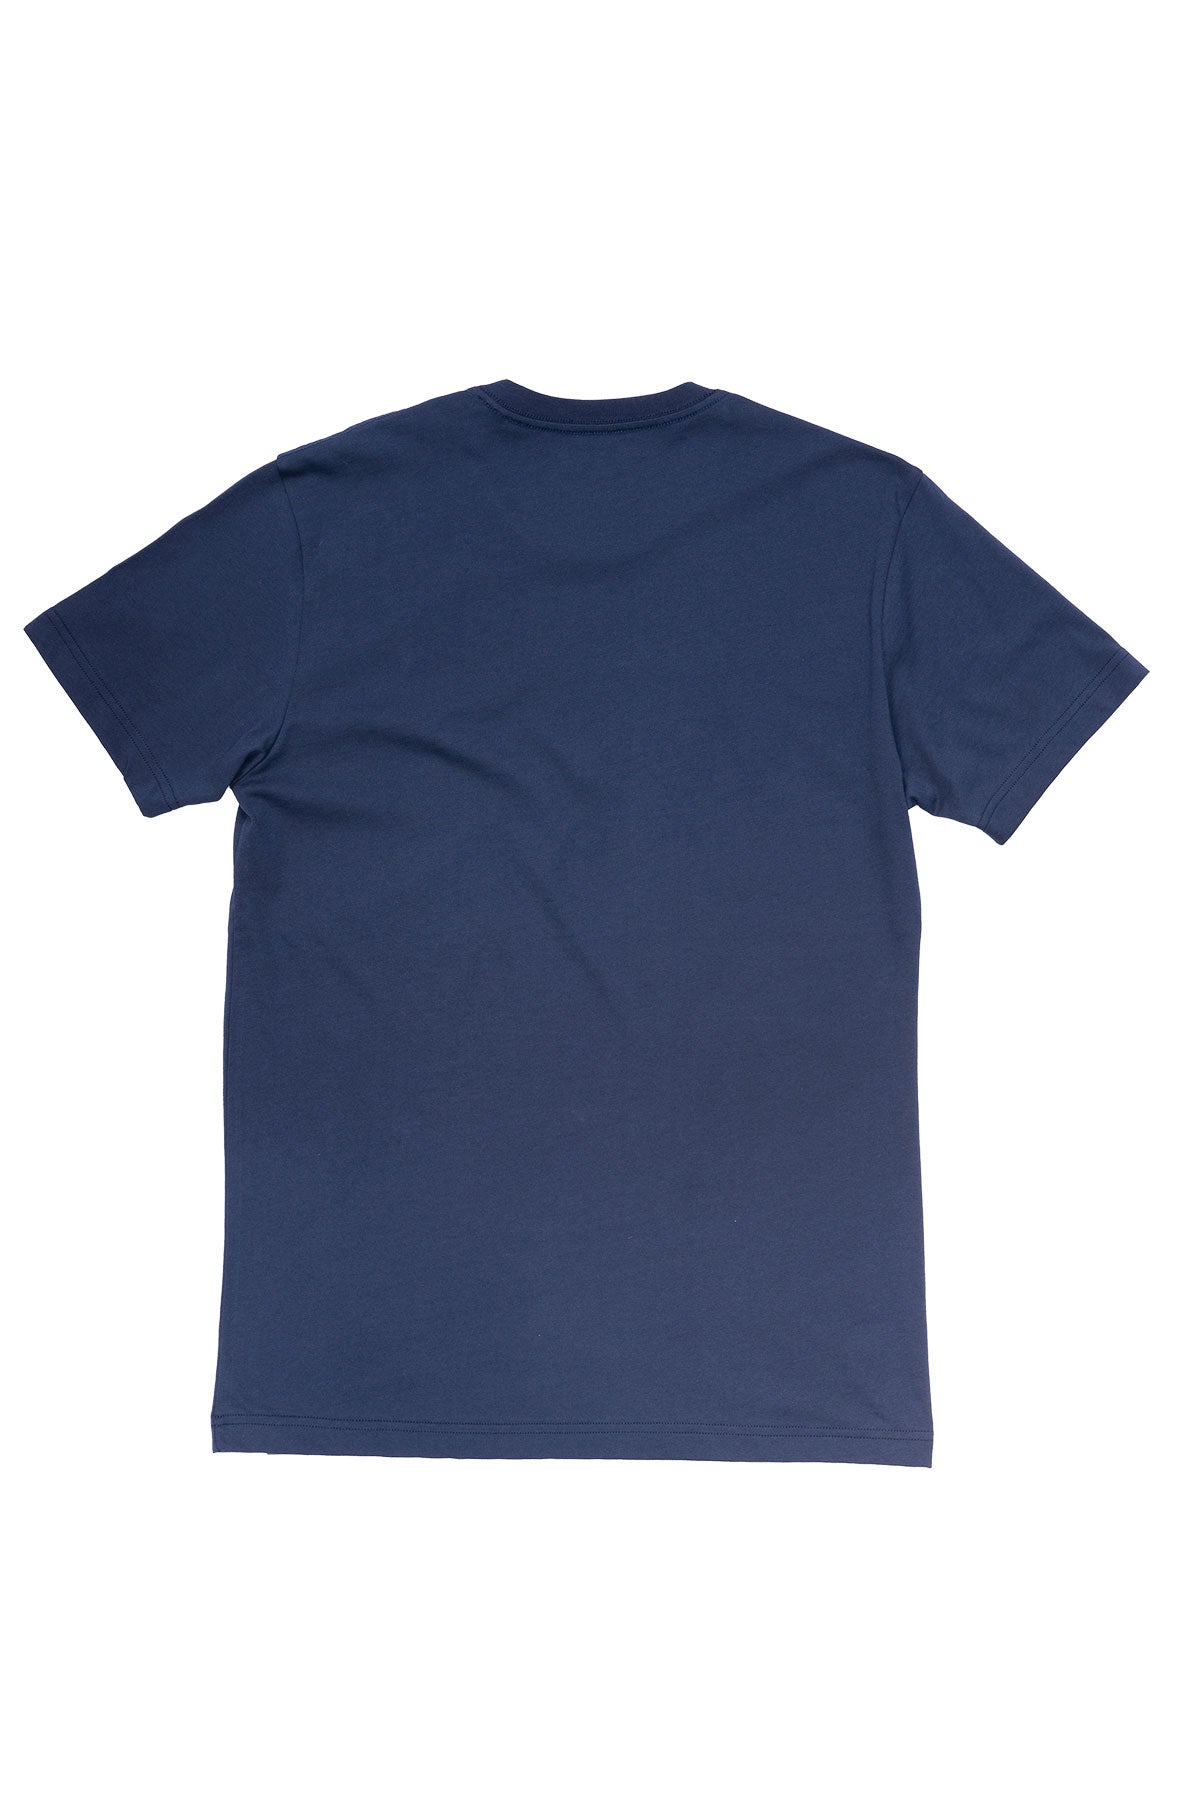 Izo Basic Short Sleeve Crew Neck T-Shirt - Navy - Stafu Pro Series